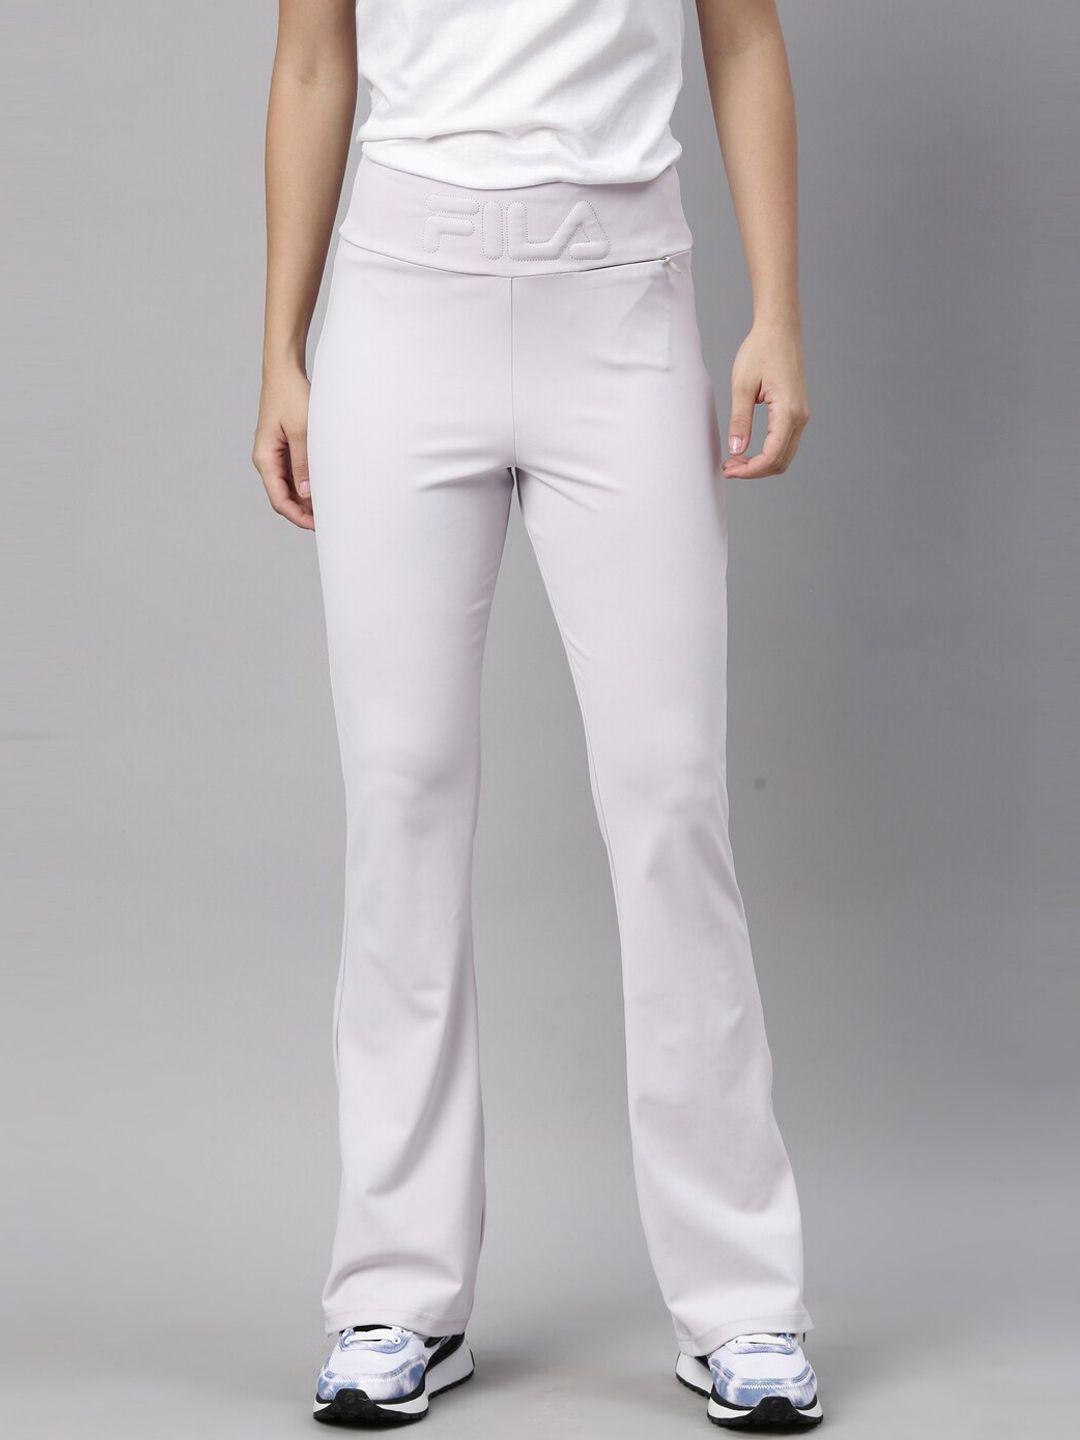 fila-women-white-solid-track-pants